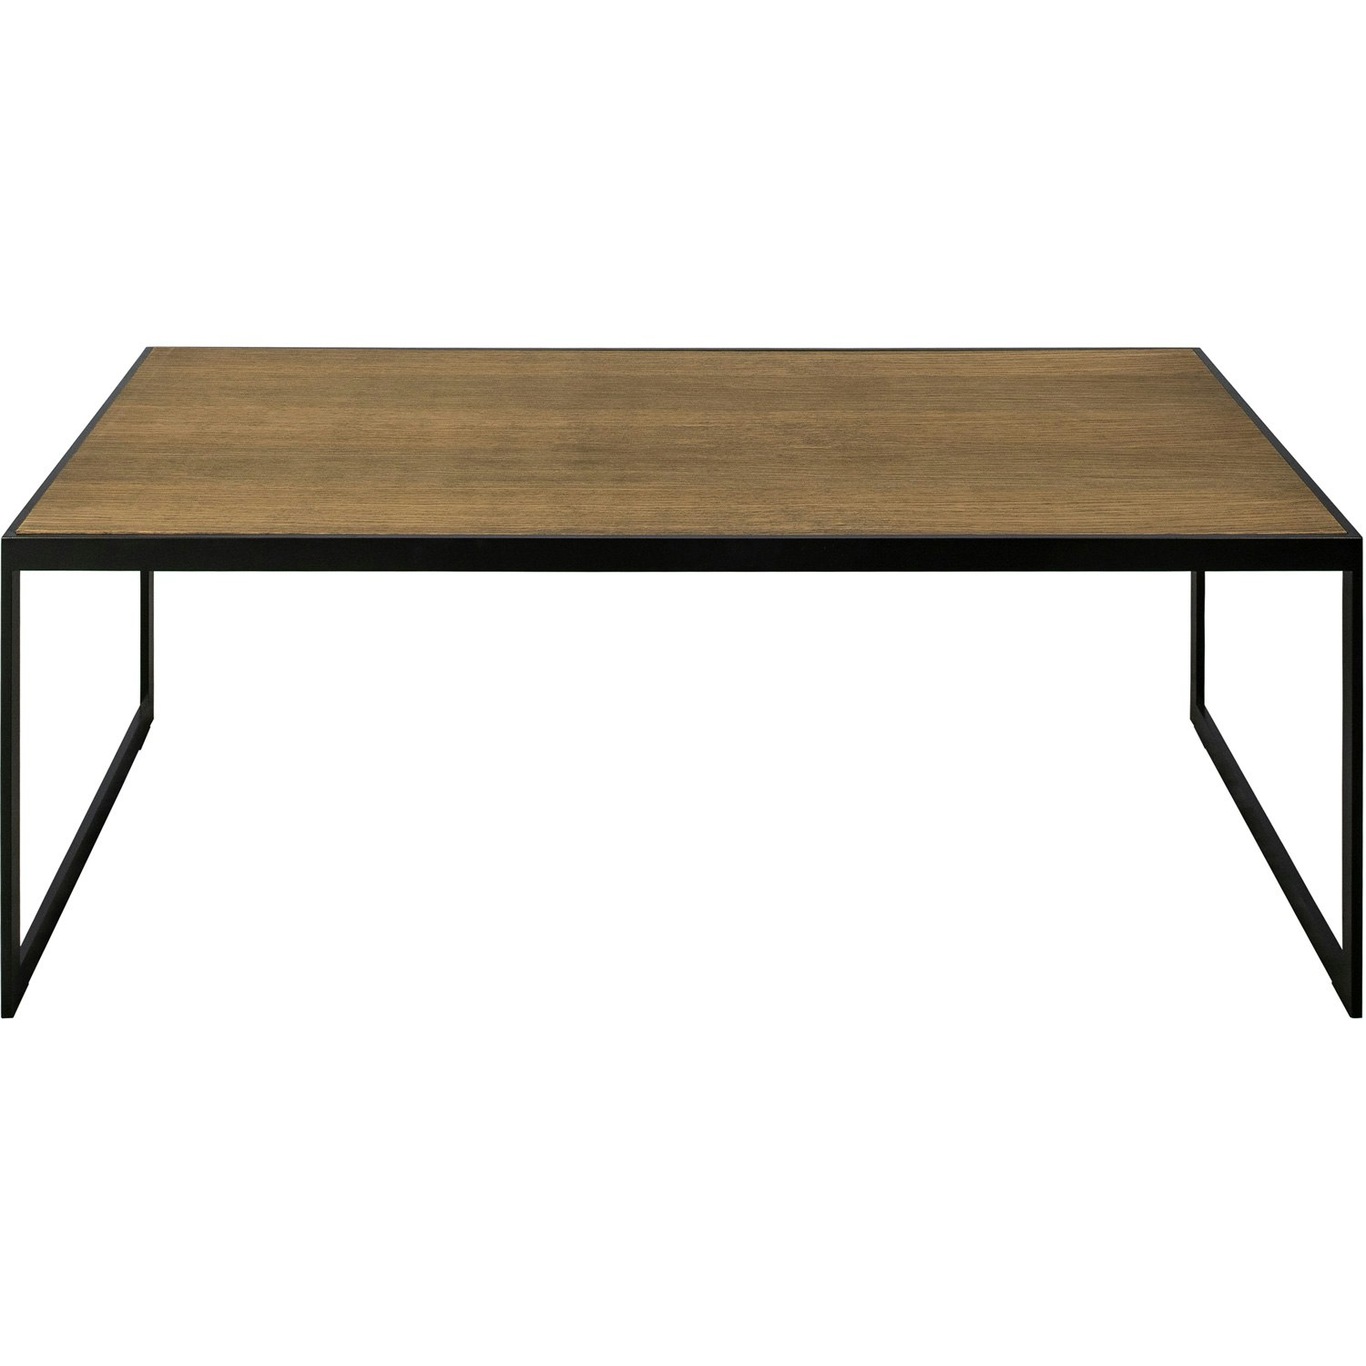 Square Coffee Table, 122x62 cm, Black/Burned Walnut